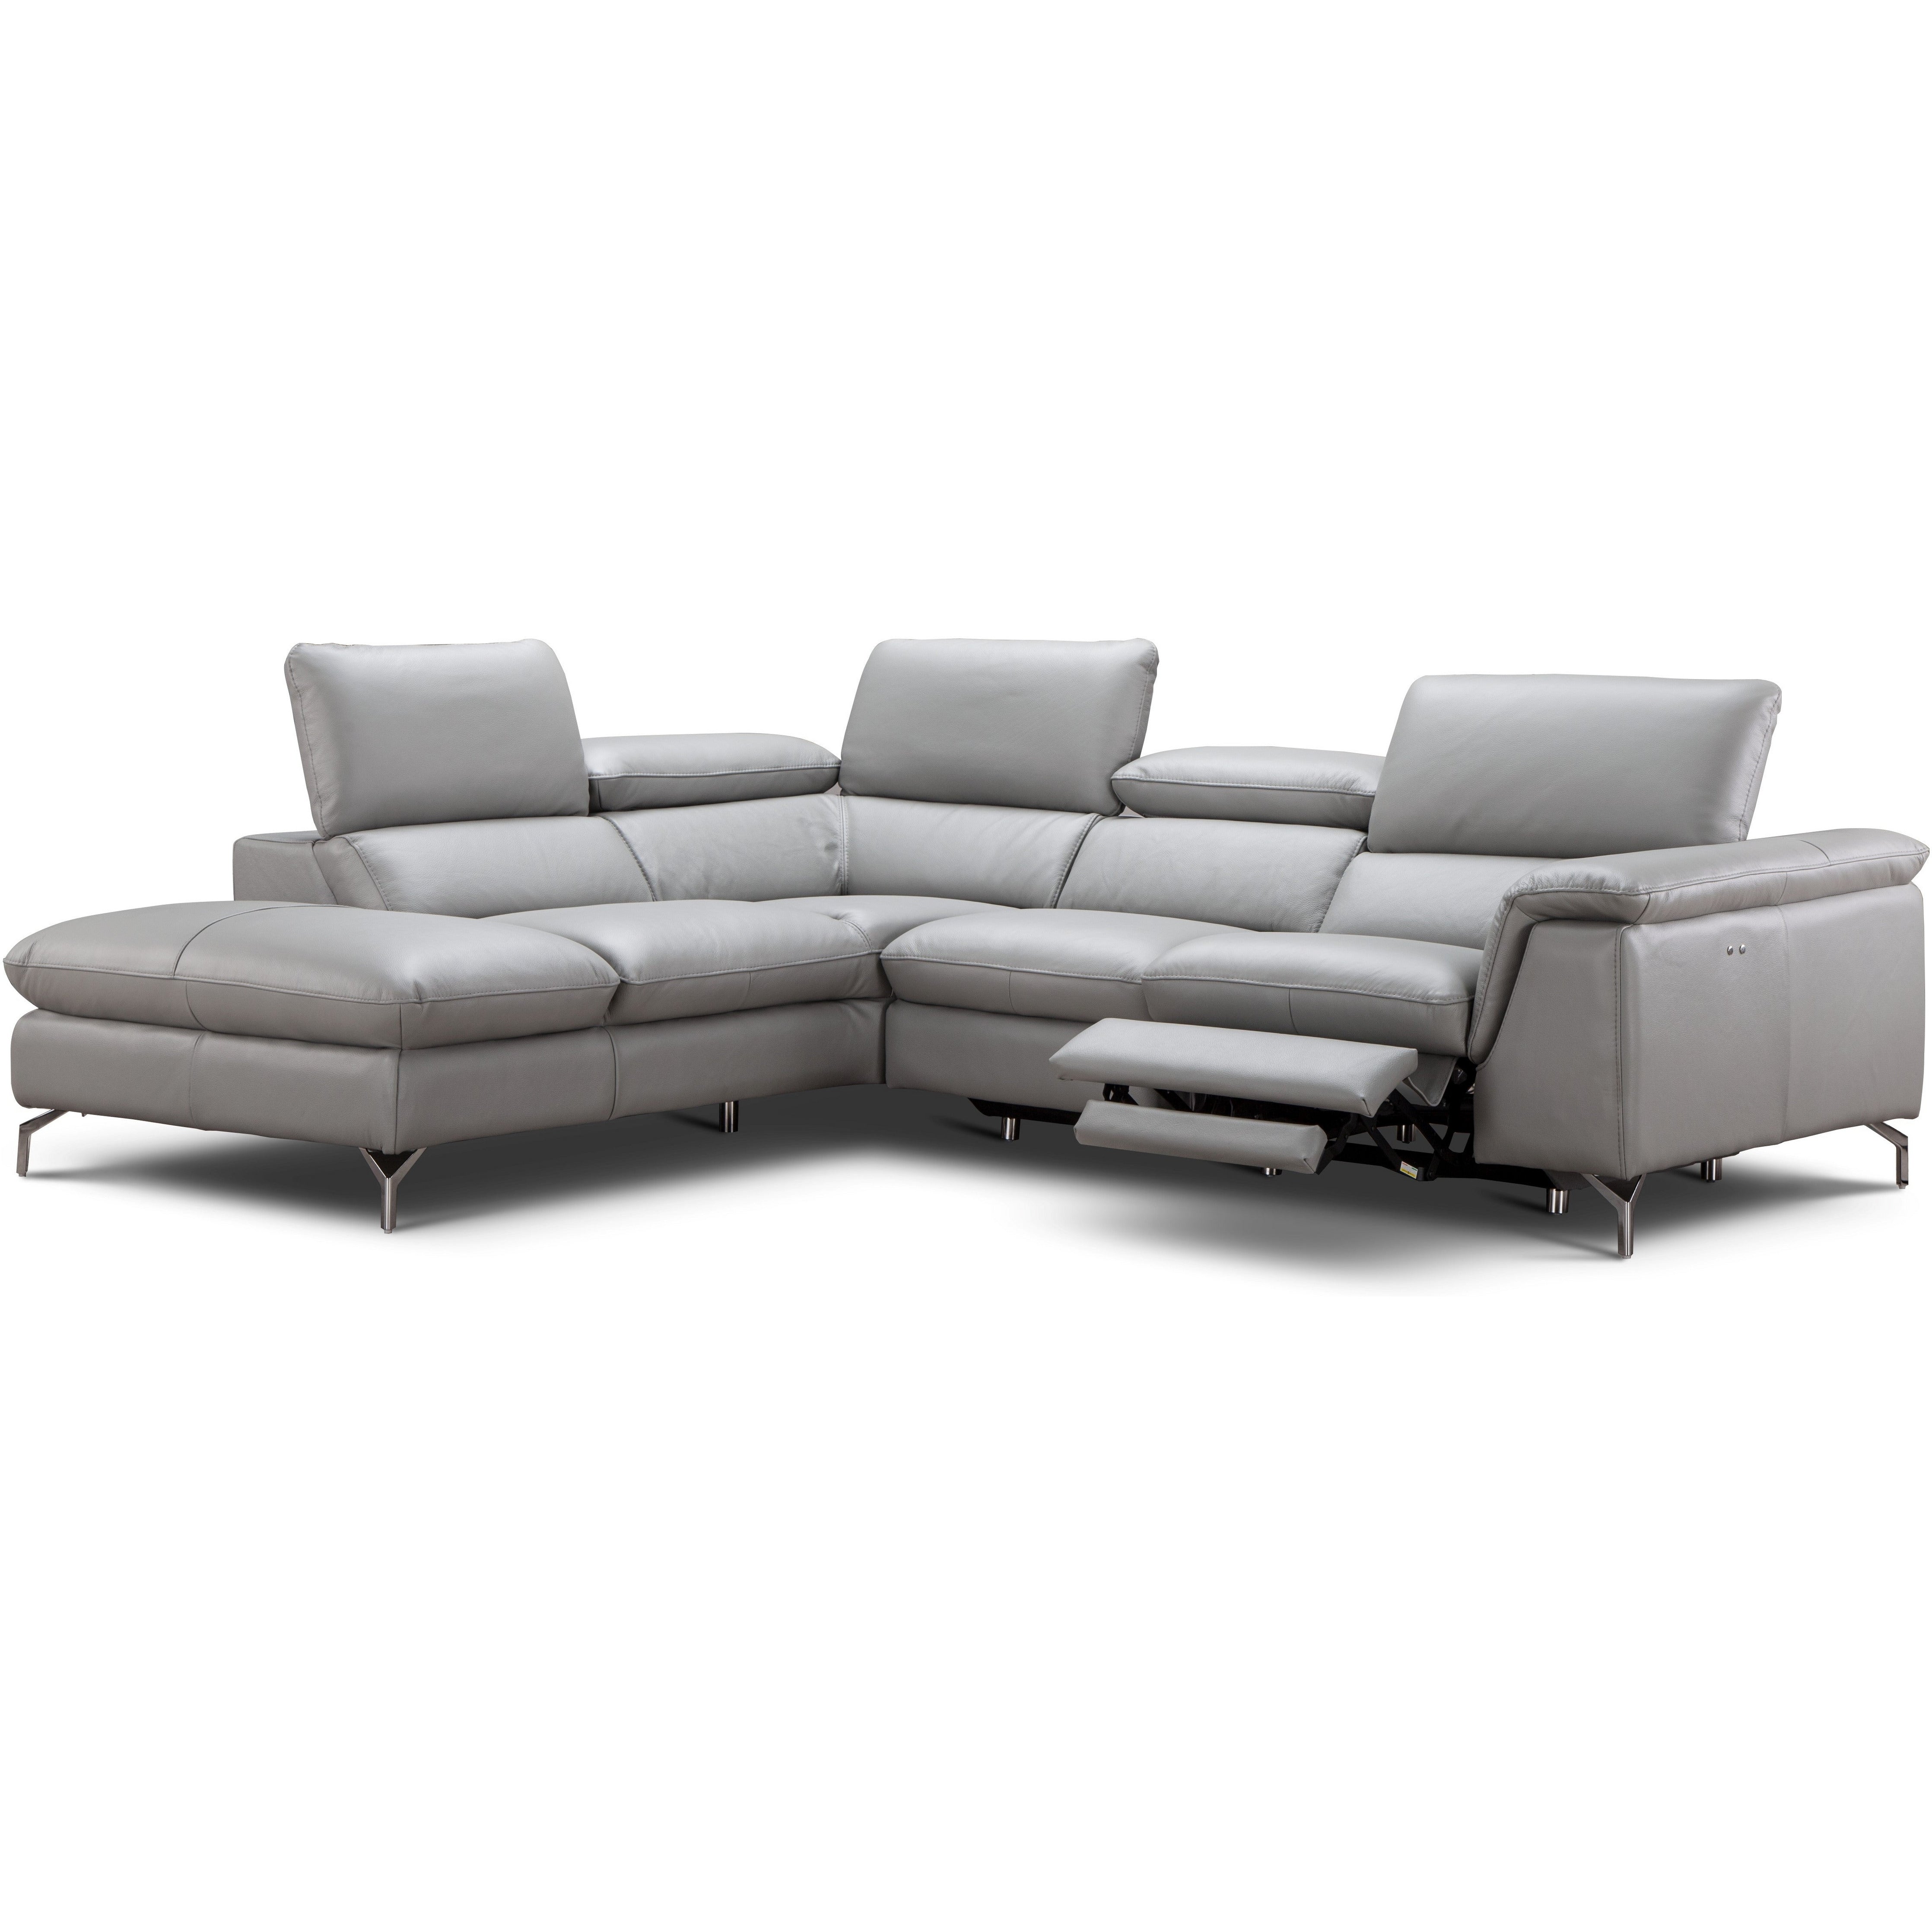 J&M Furniture Viola Premium Leather Sectional (SKU18235)